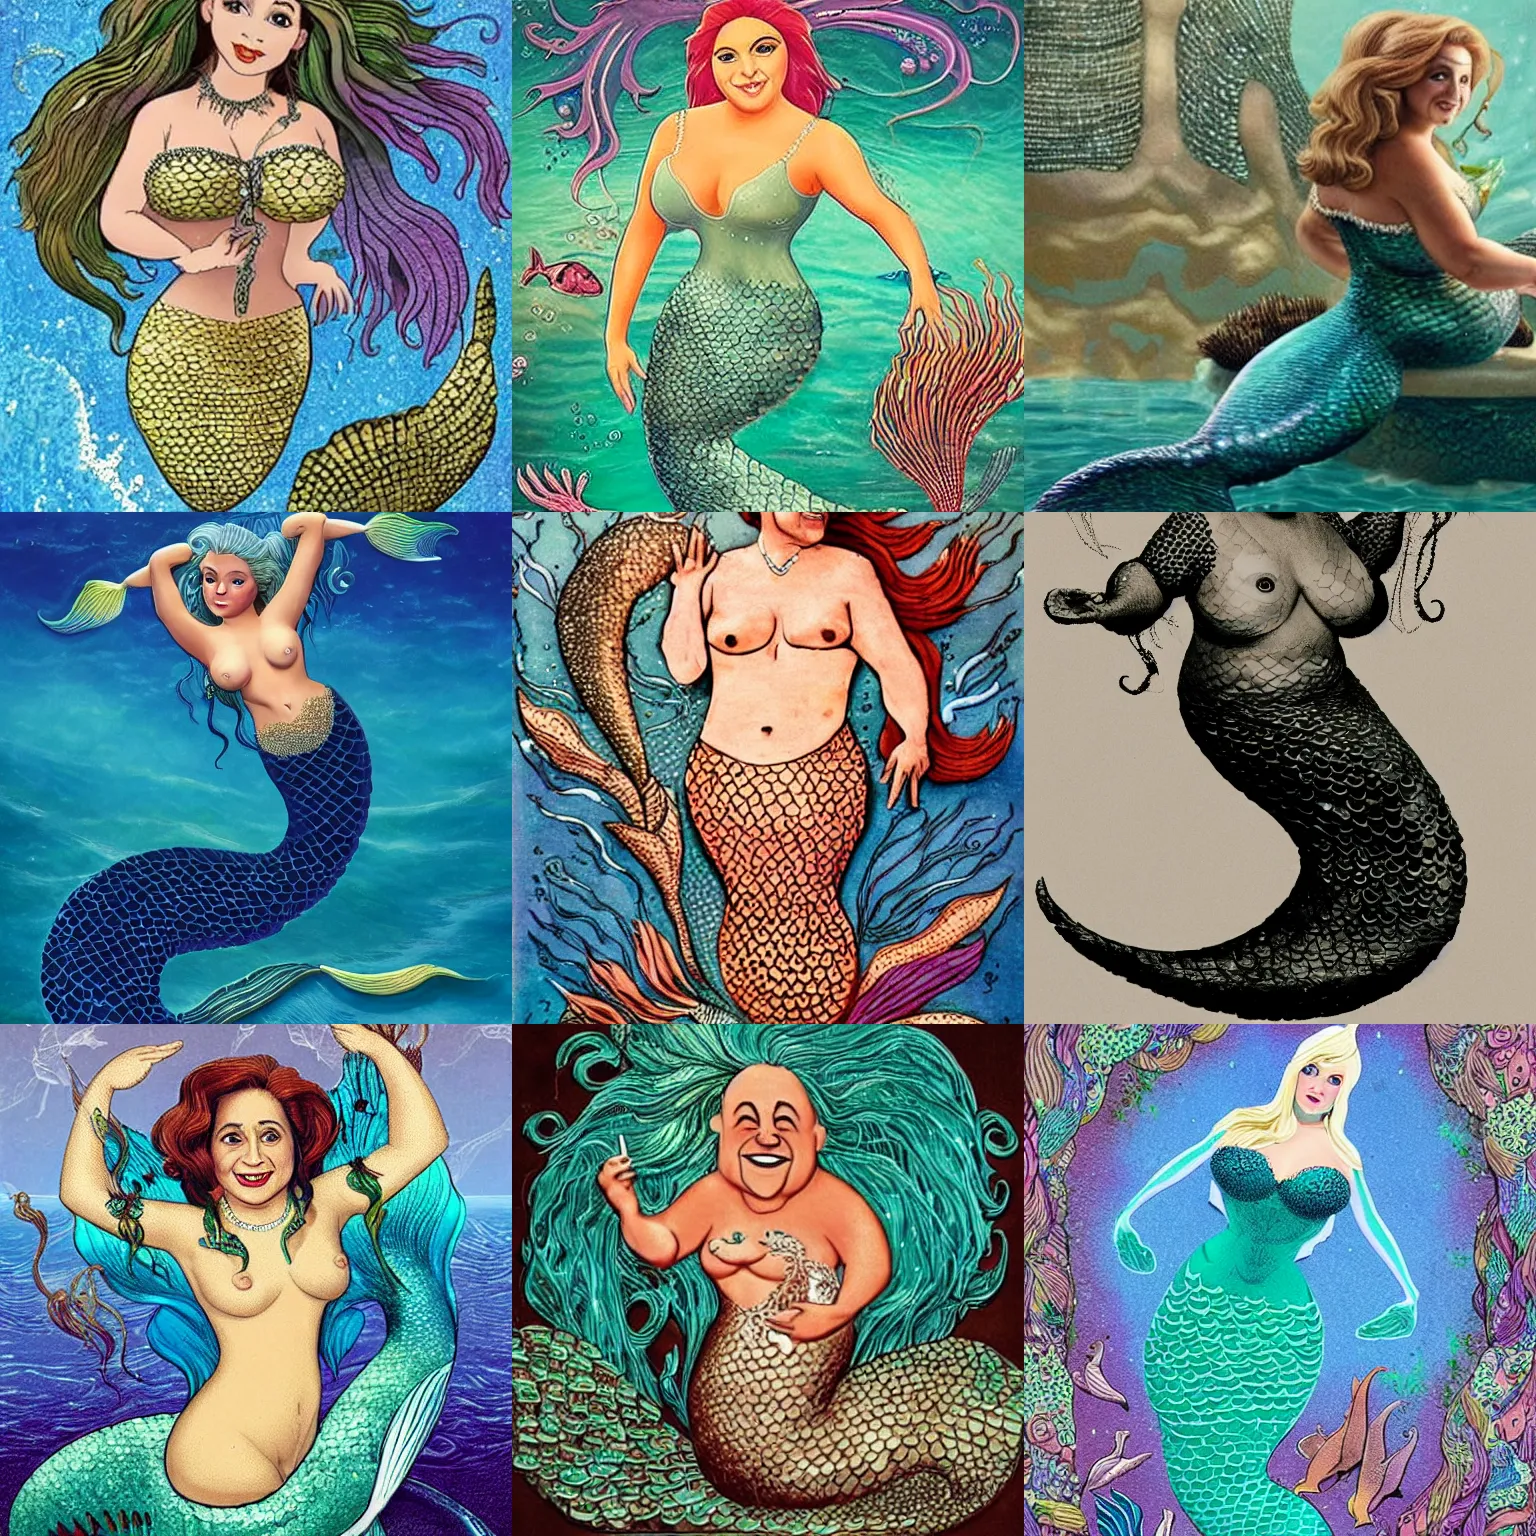 Prompt: Danny devito as a mermaid, intricate, elegant,